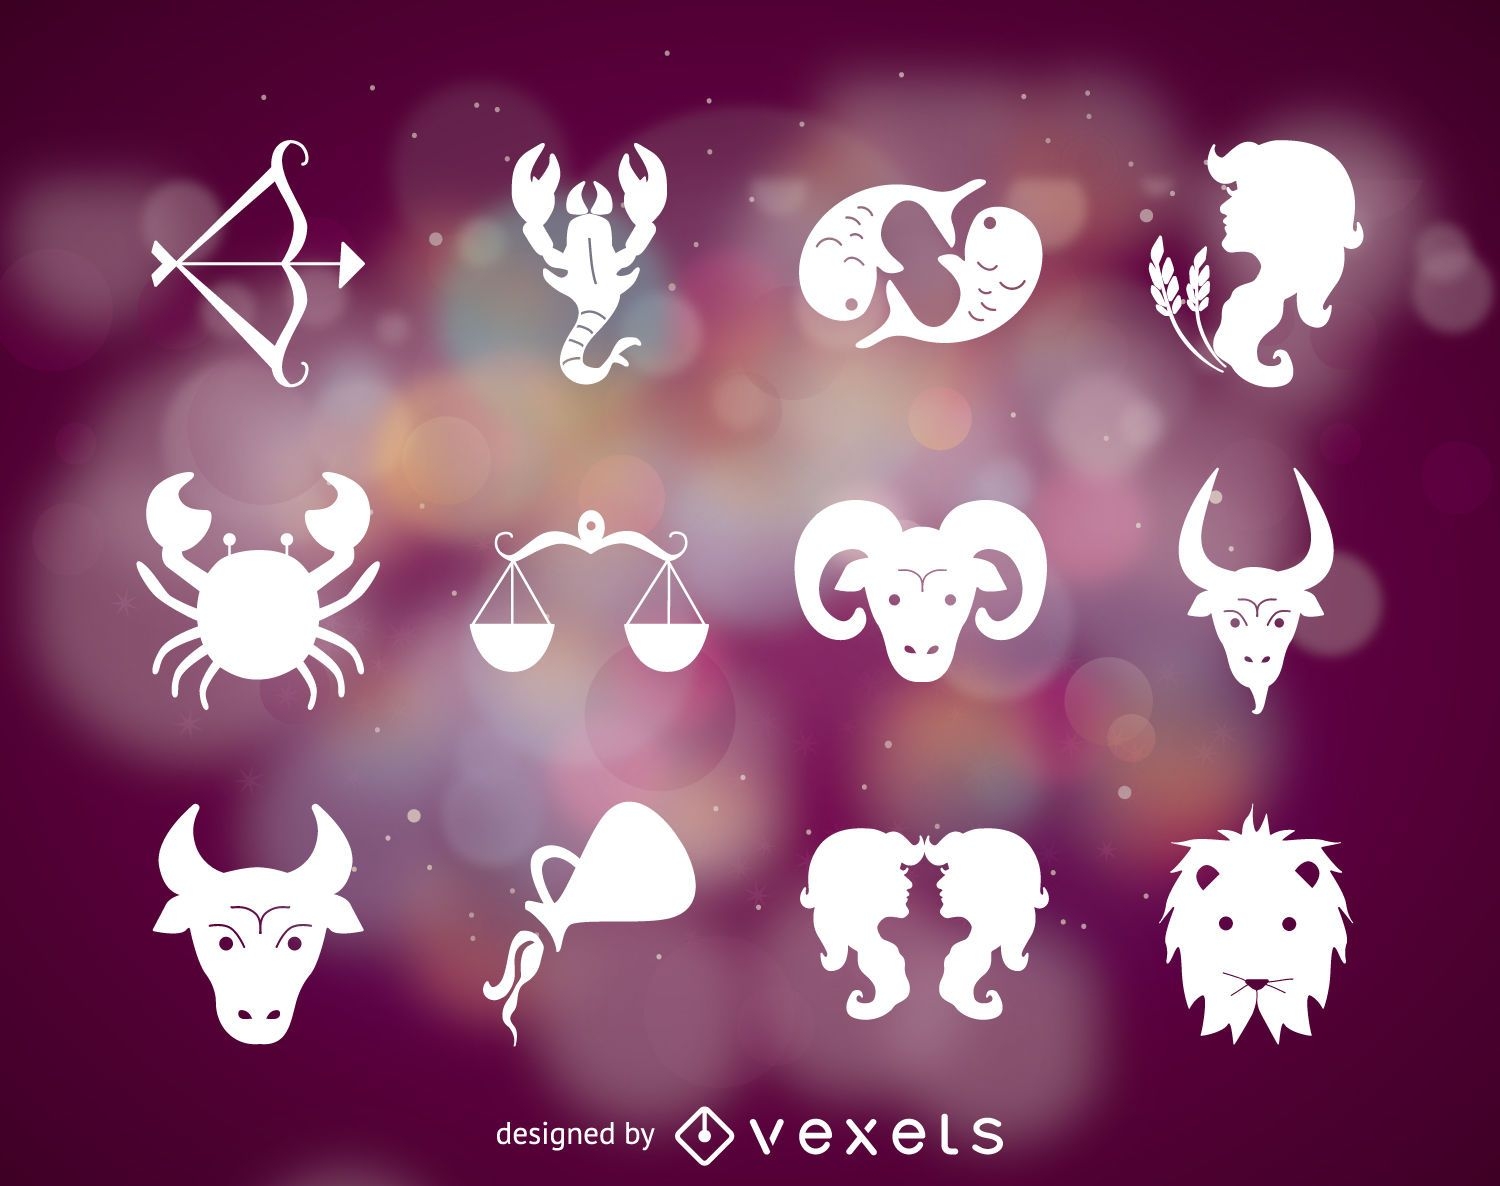 Zodiac sign symbols